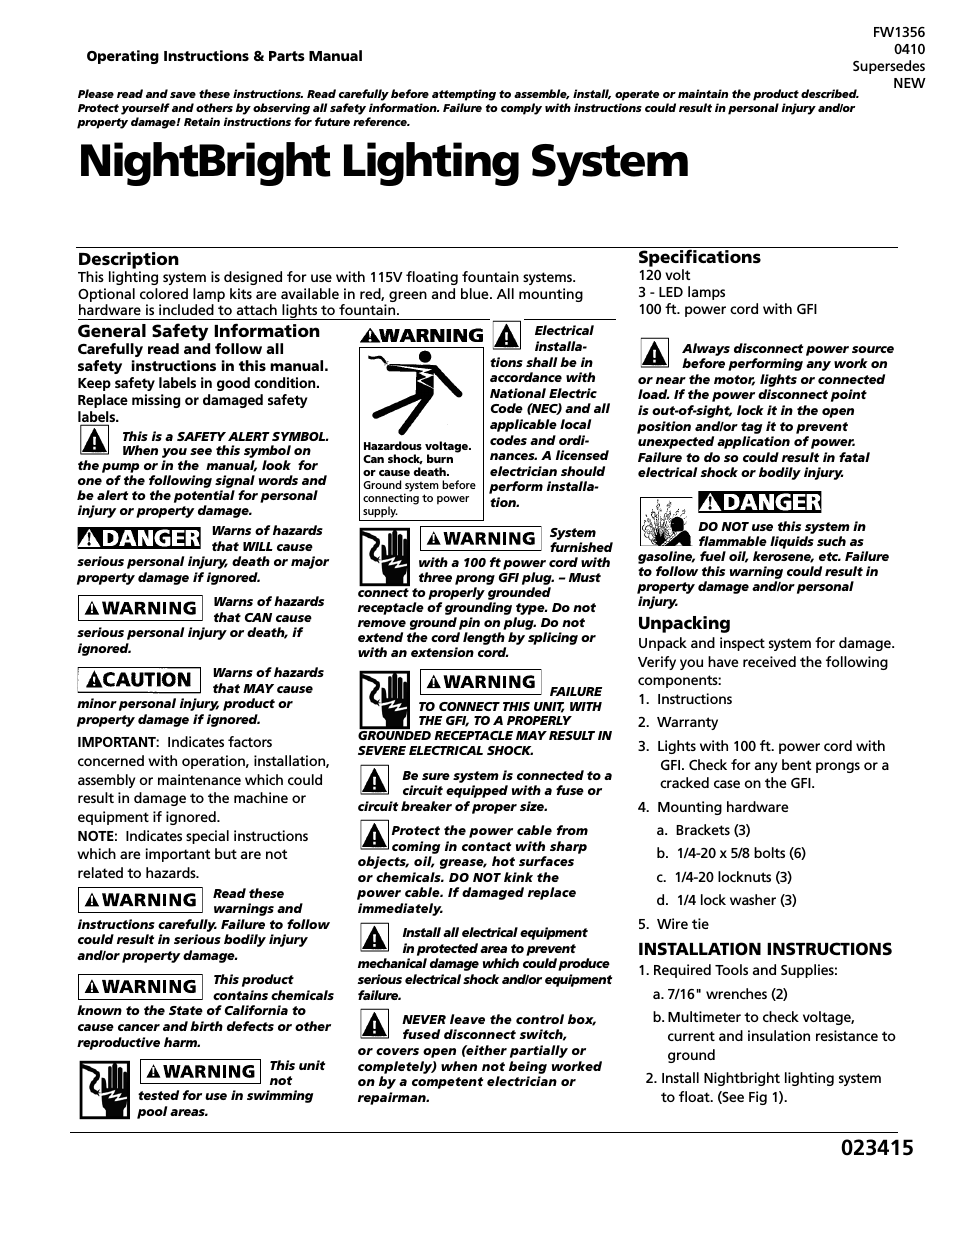 NightBright Lighting System w-GFI